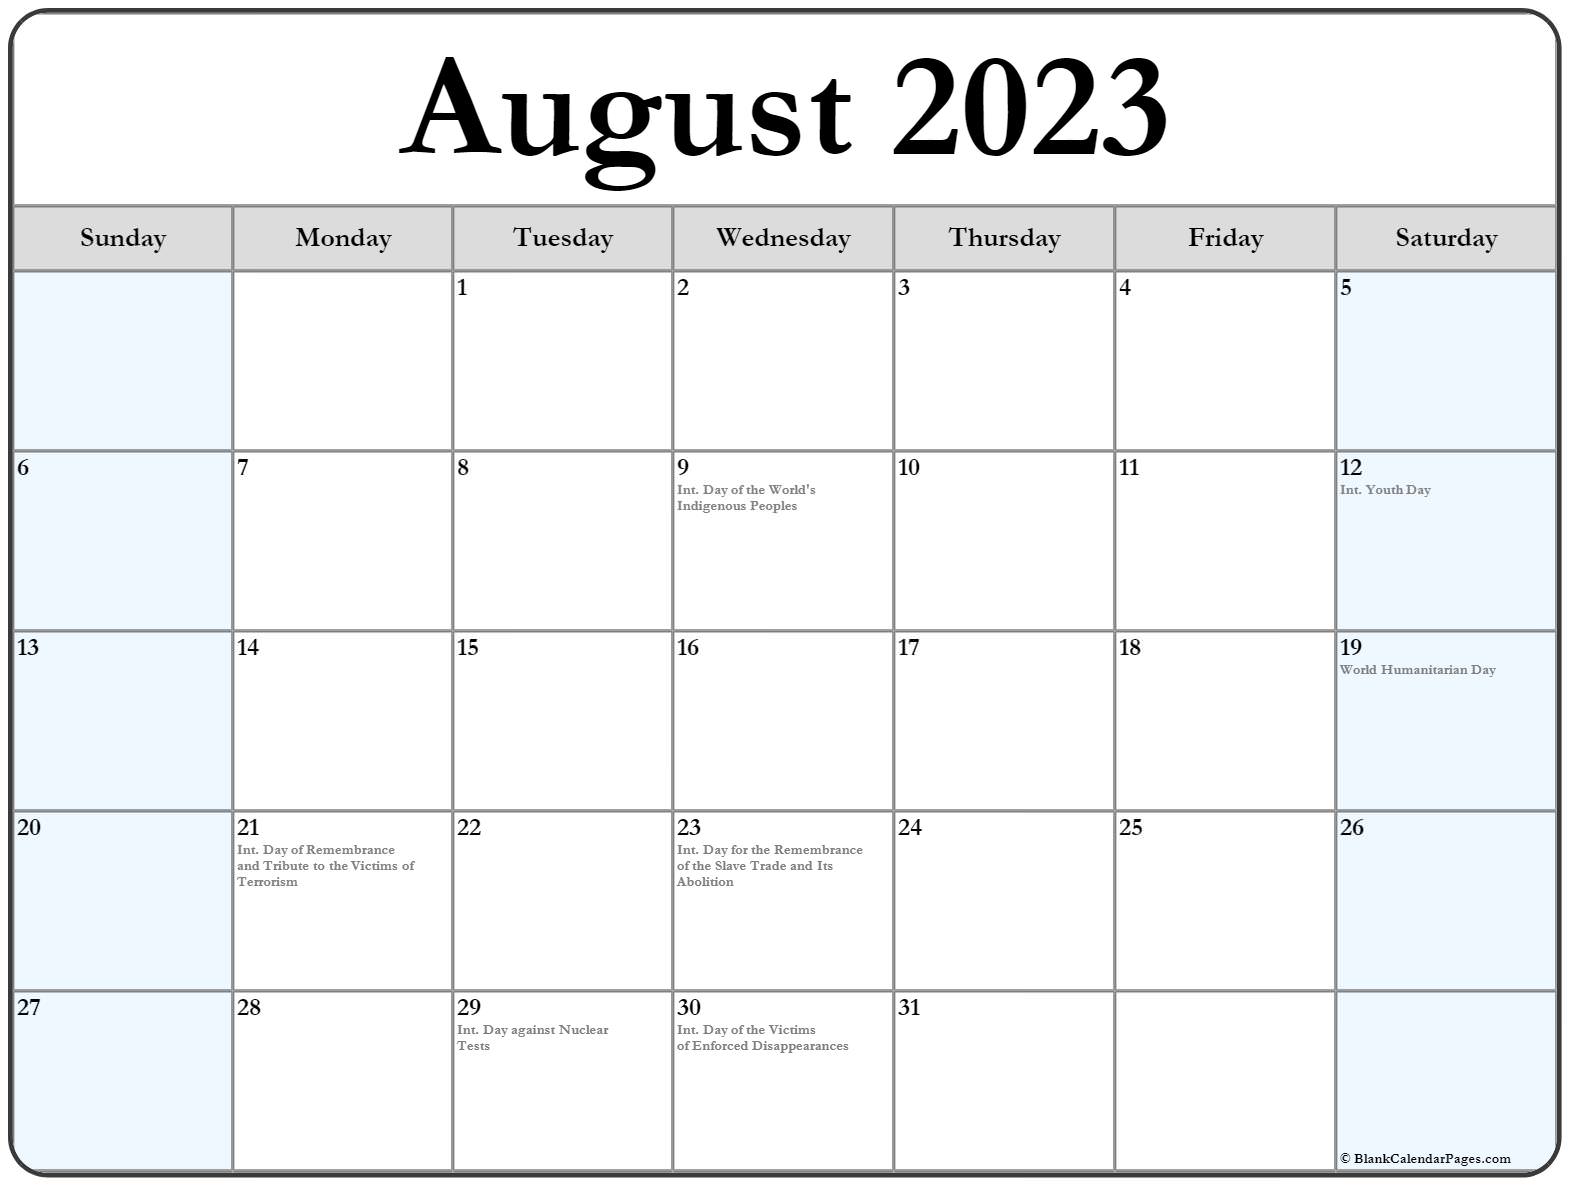 august-2023-calendar-special-days-get-latest-map-update